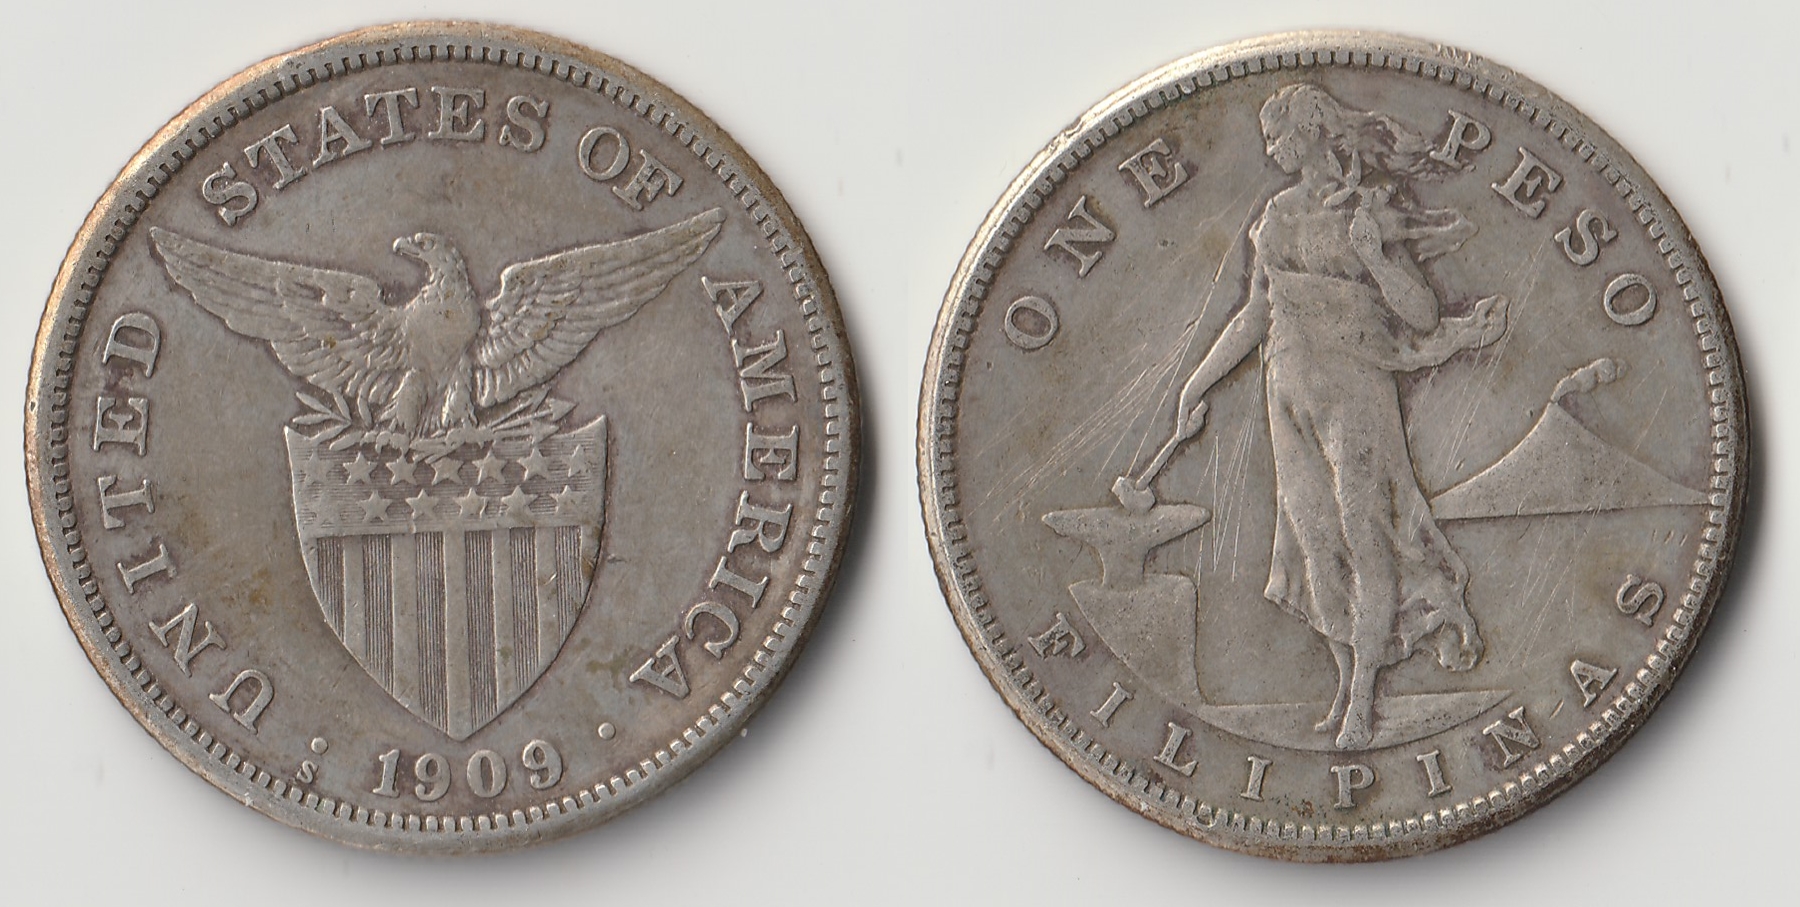 1909 s philippines 1 peso.jpg